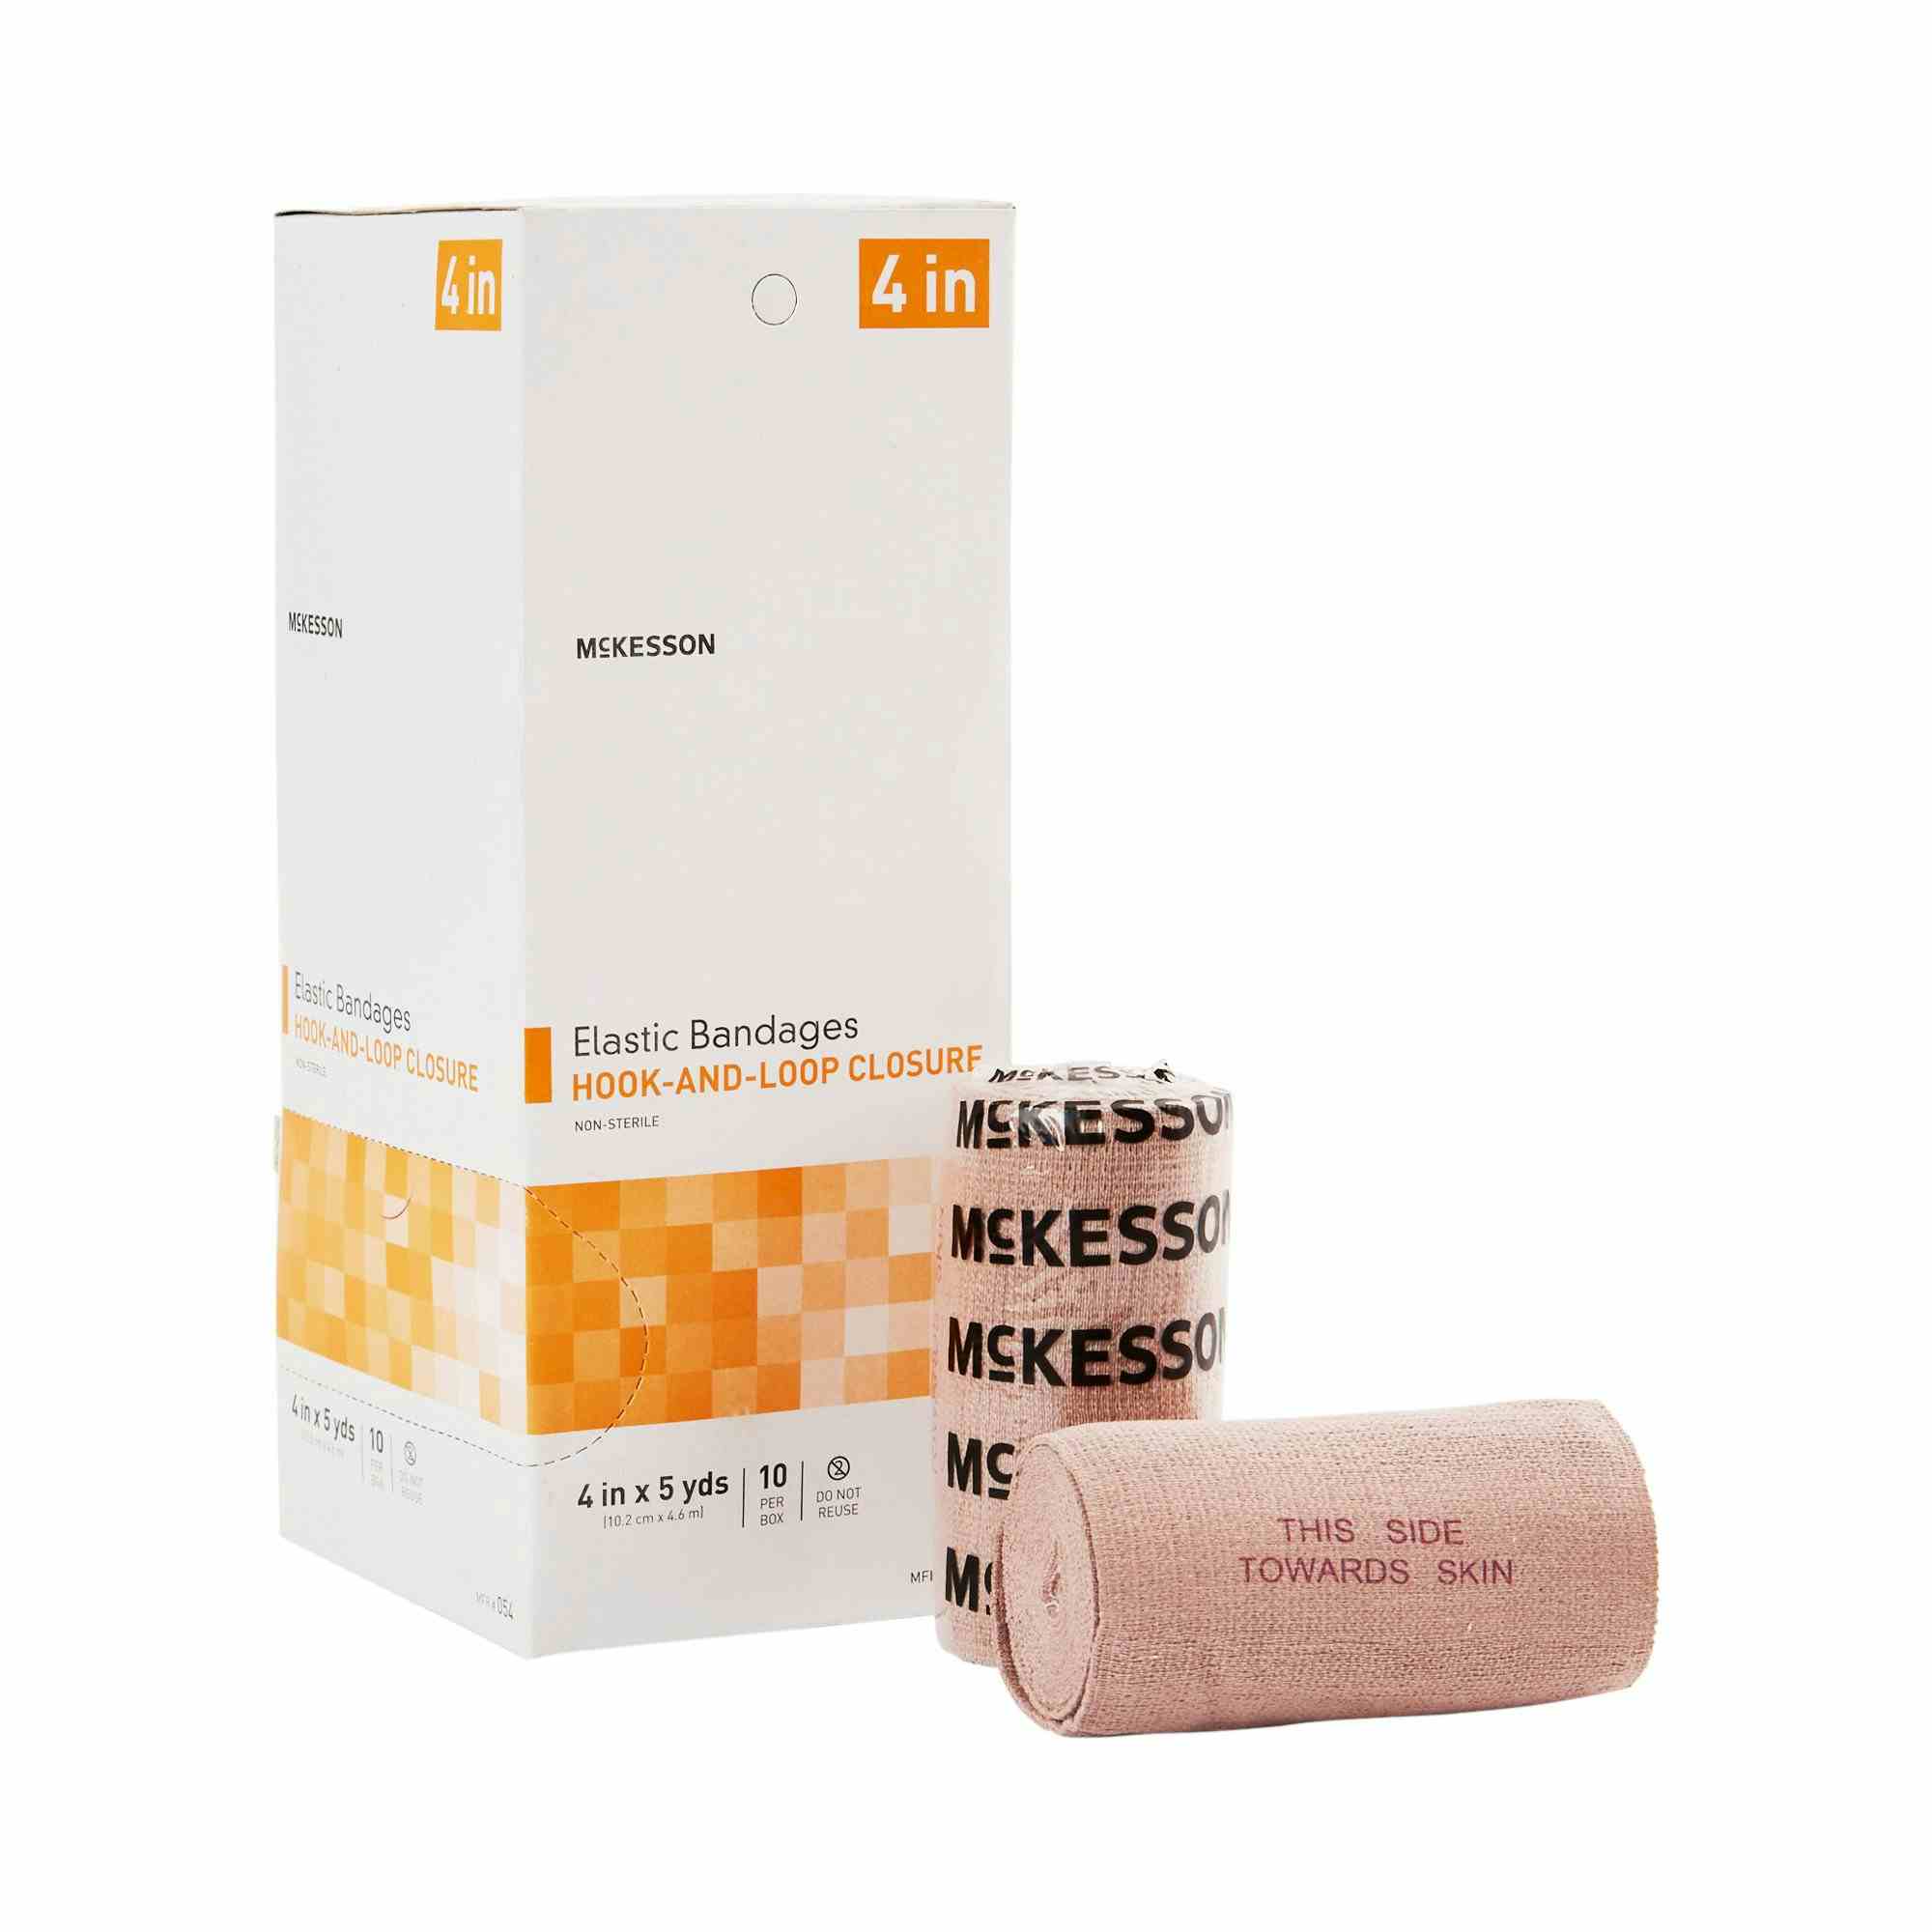  McKesson Elastic Bandages Hook-and-Loop Closure, 4" x 5 yds, 054, Box of 10 Rolls